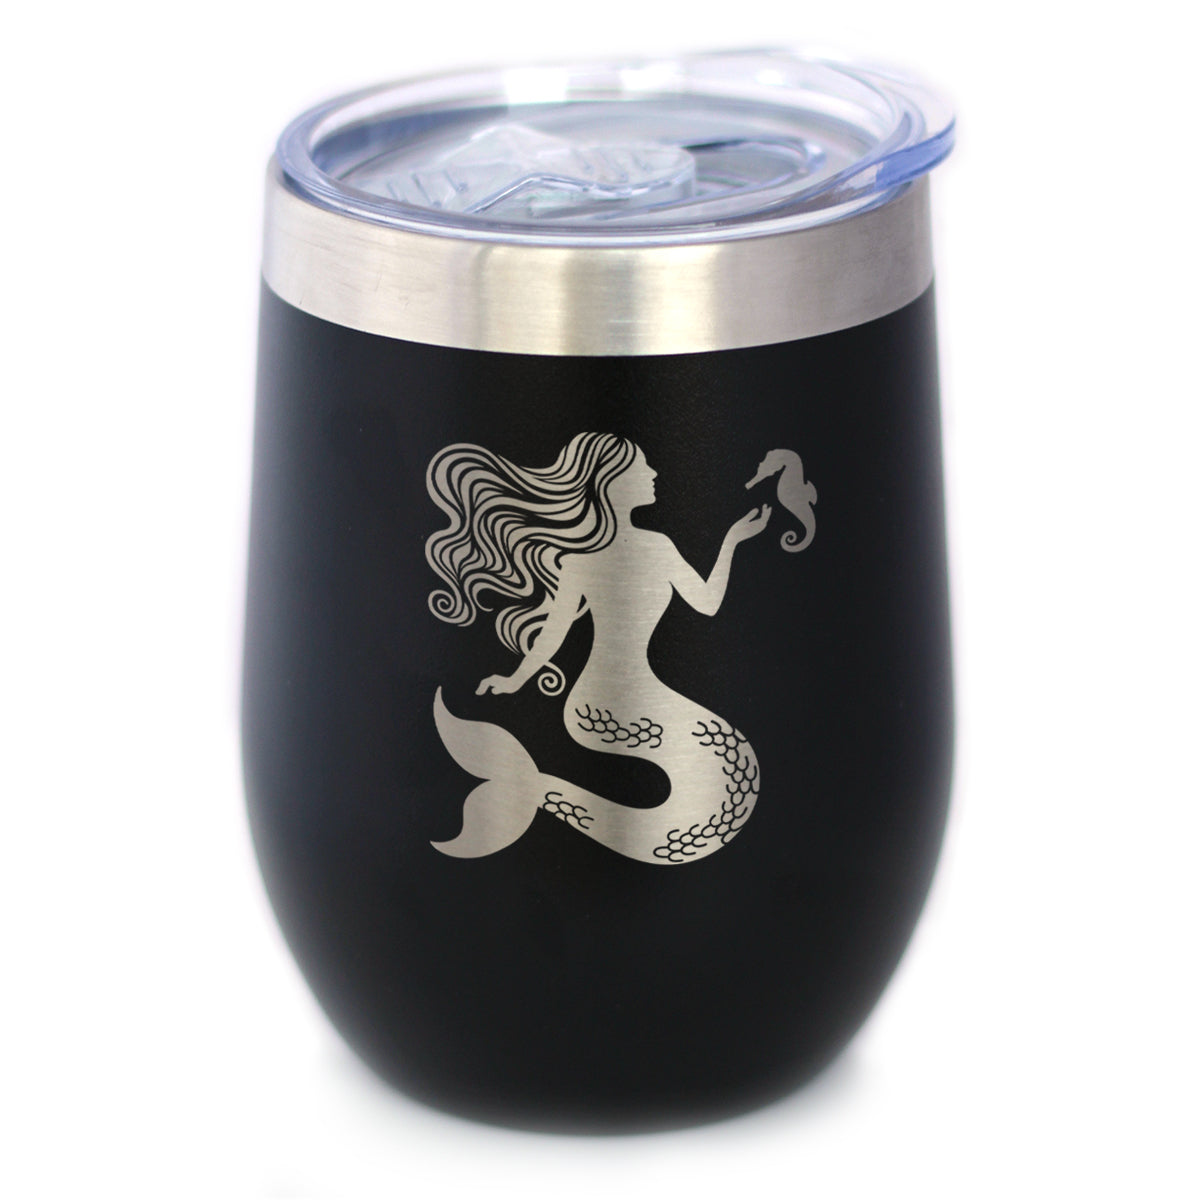 Mermaid - Wine Tumbler Glass with Sliding Lid - Stainless Steel Travel Mug - Cute Mermaid Gifts for Women